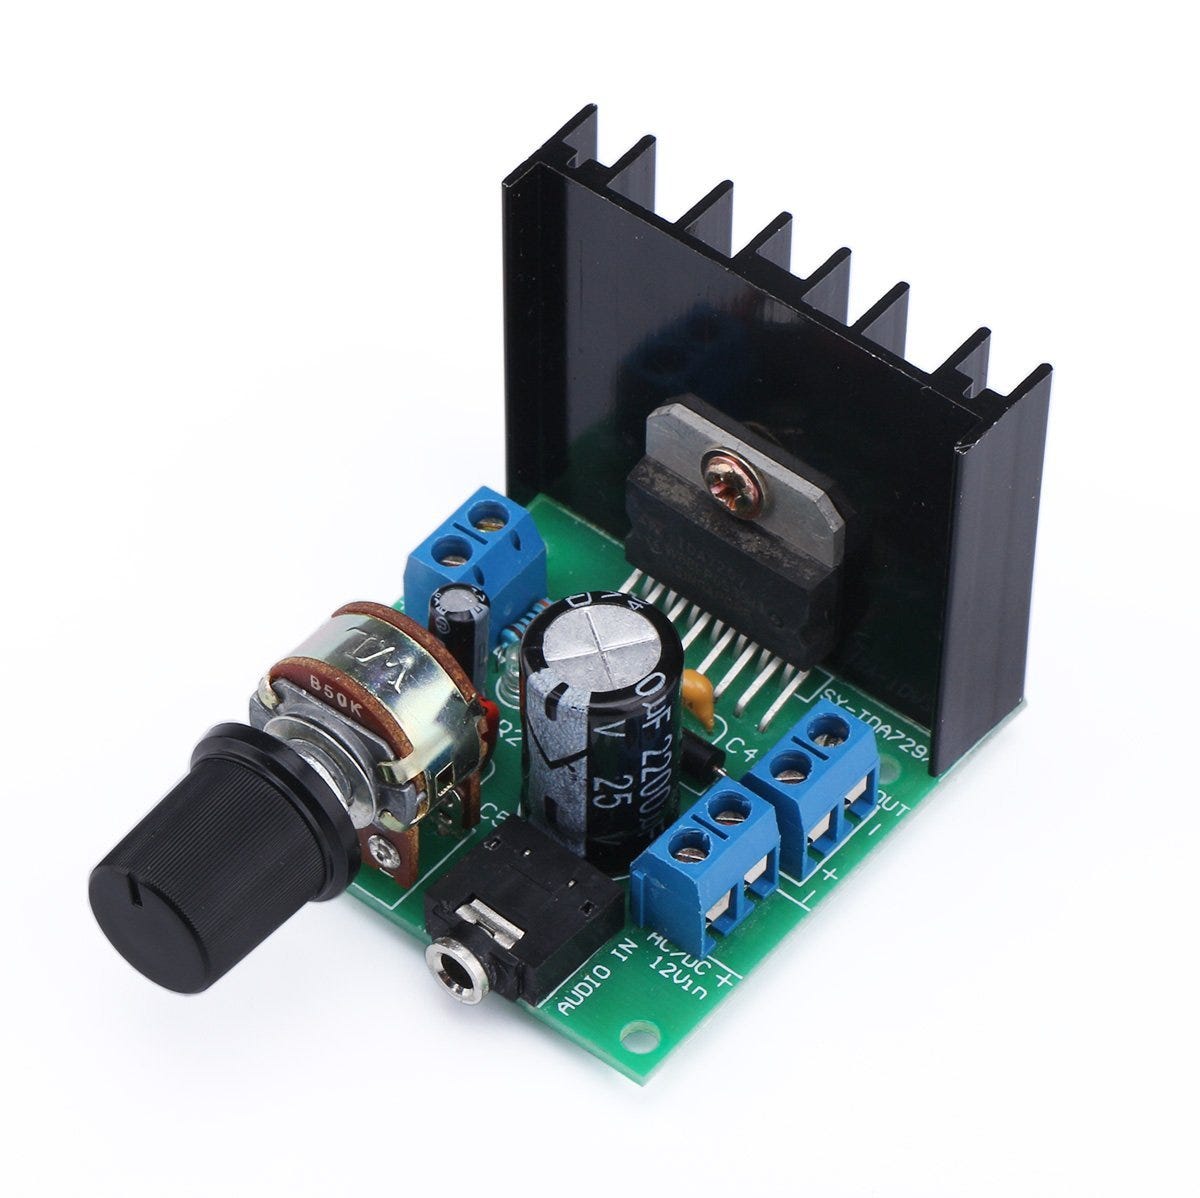 DIY: Chromecast Audio Box with Amplifier | by Francesco Pontillo | Medium